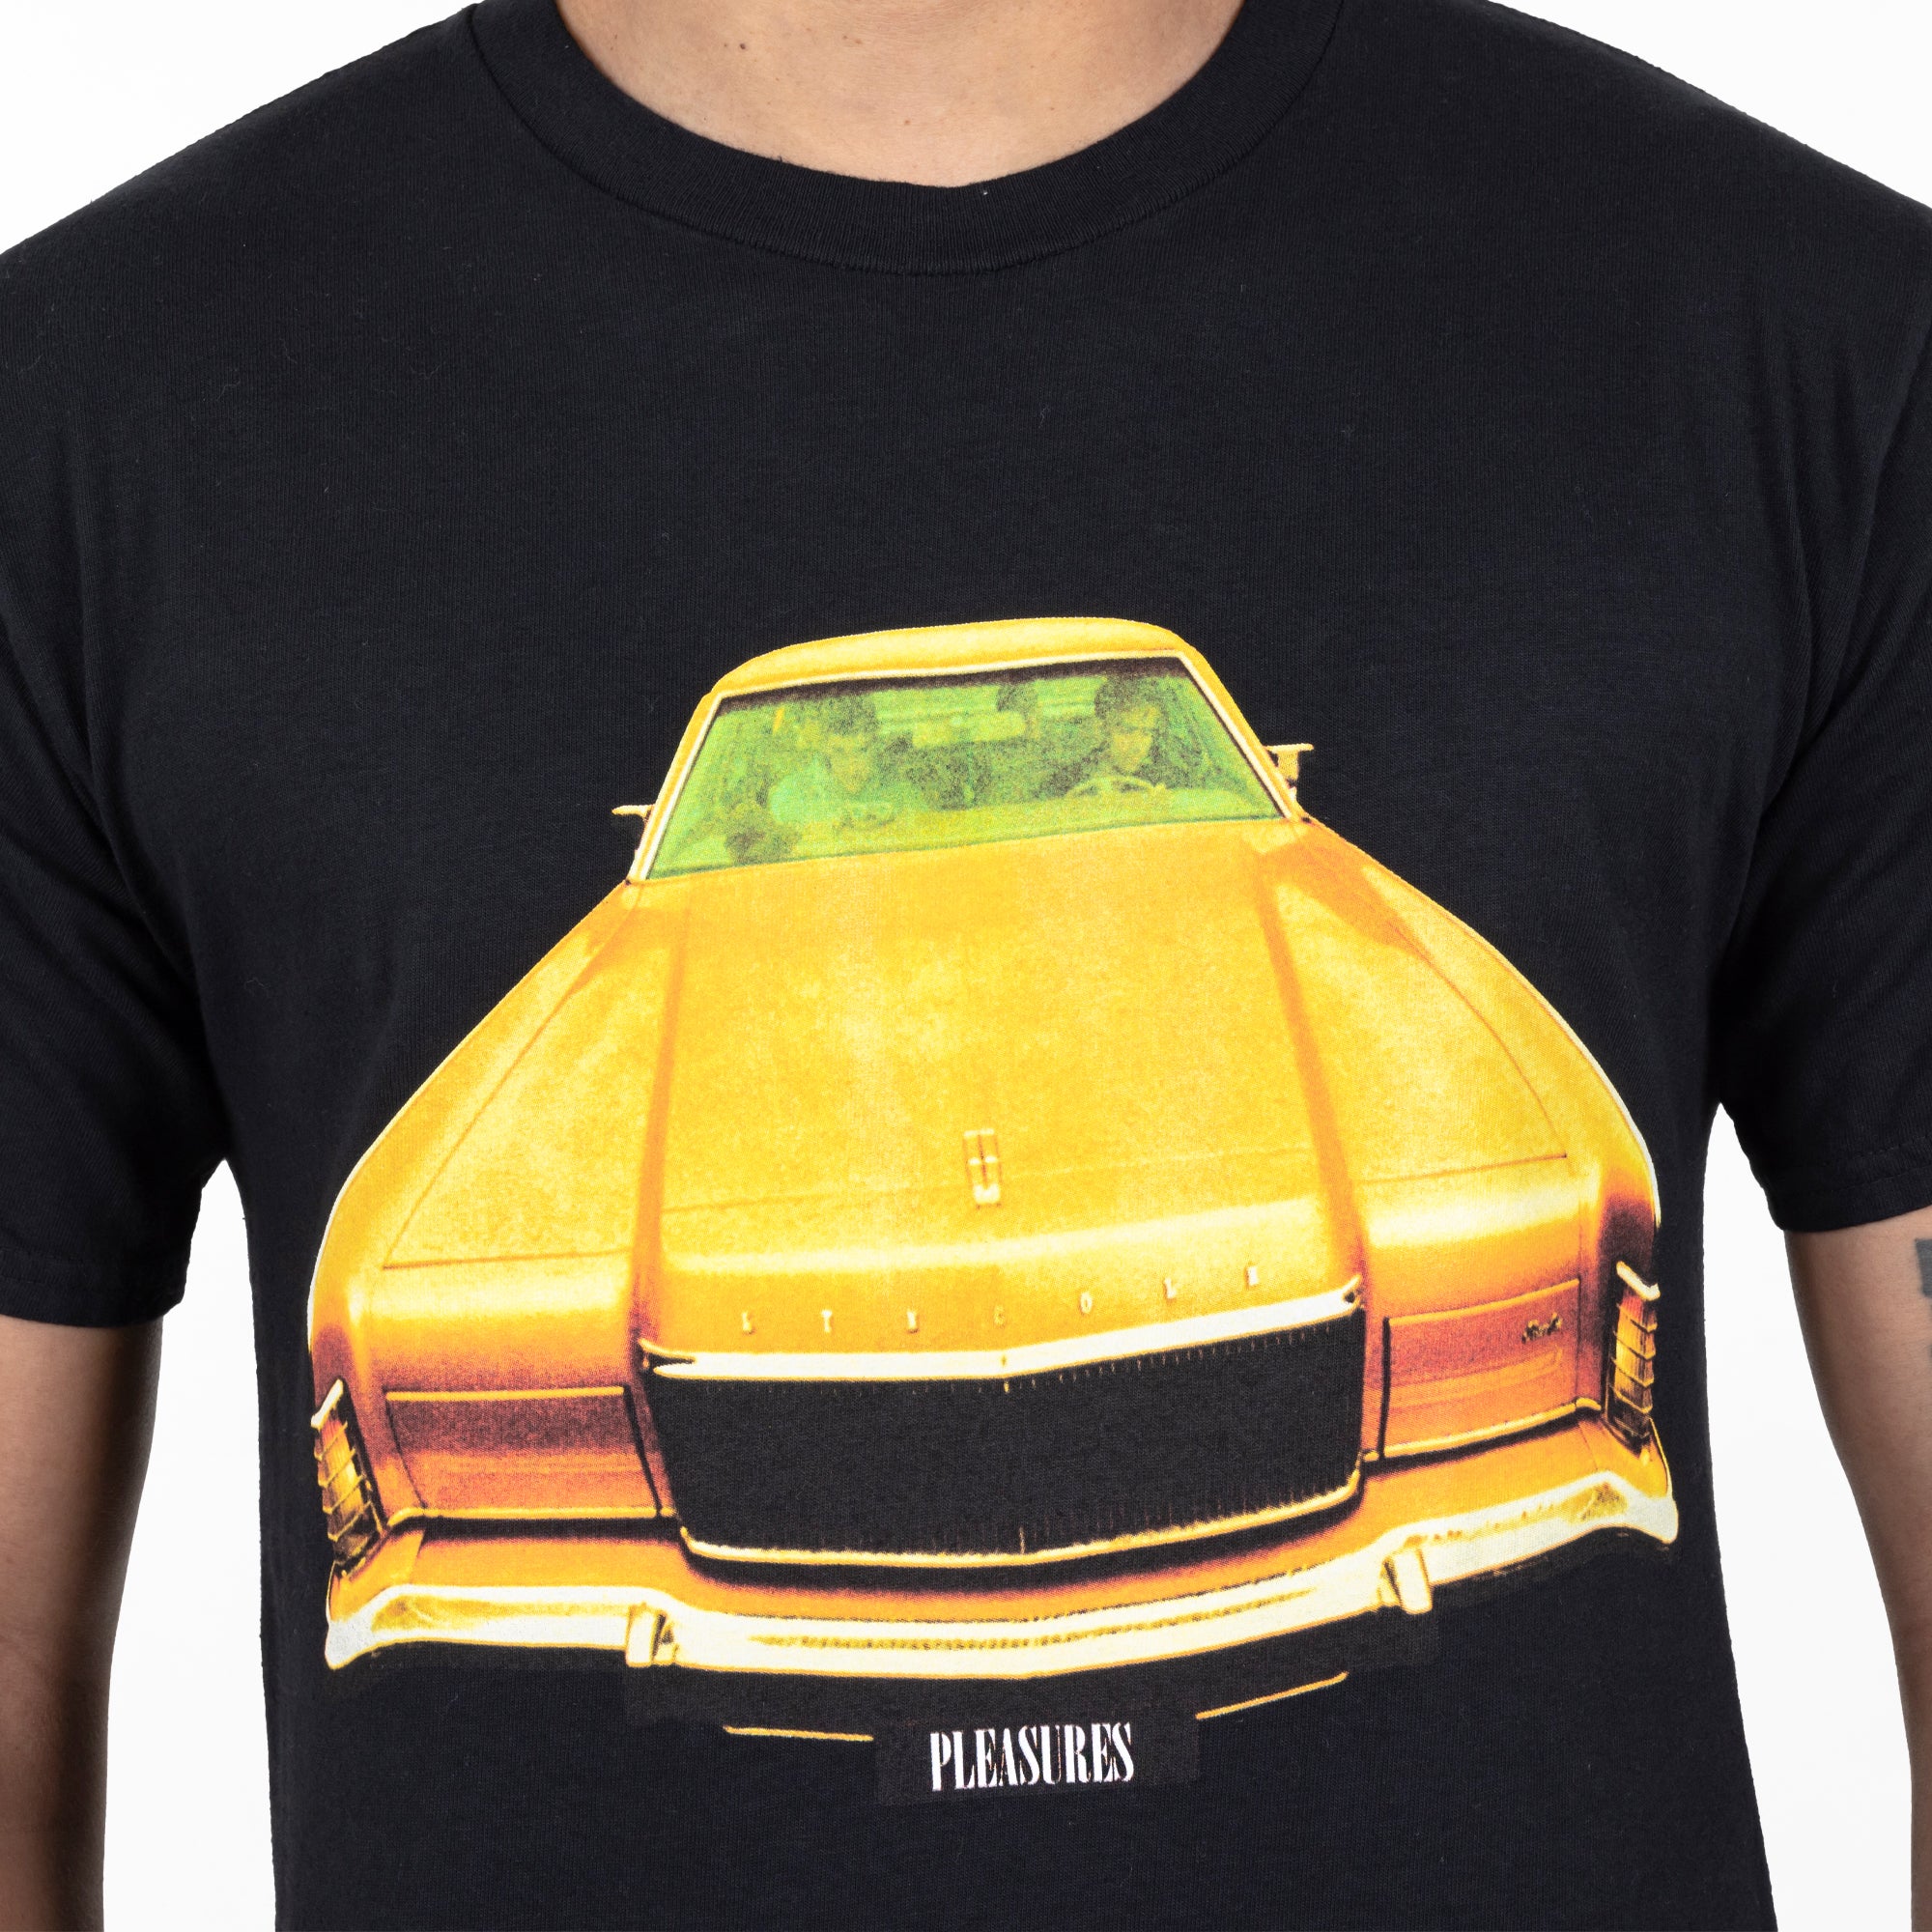 Pleasures Song 2 X Blur T-Shirt